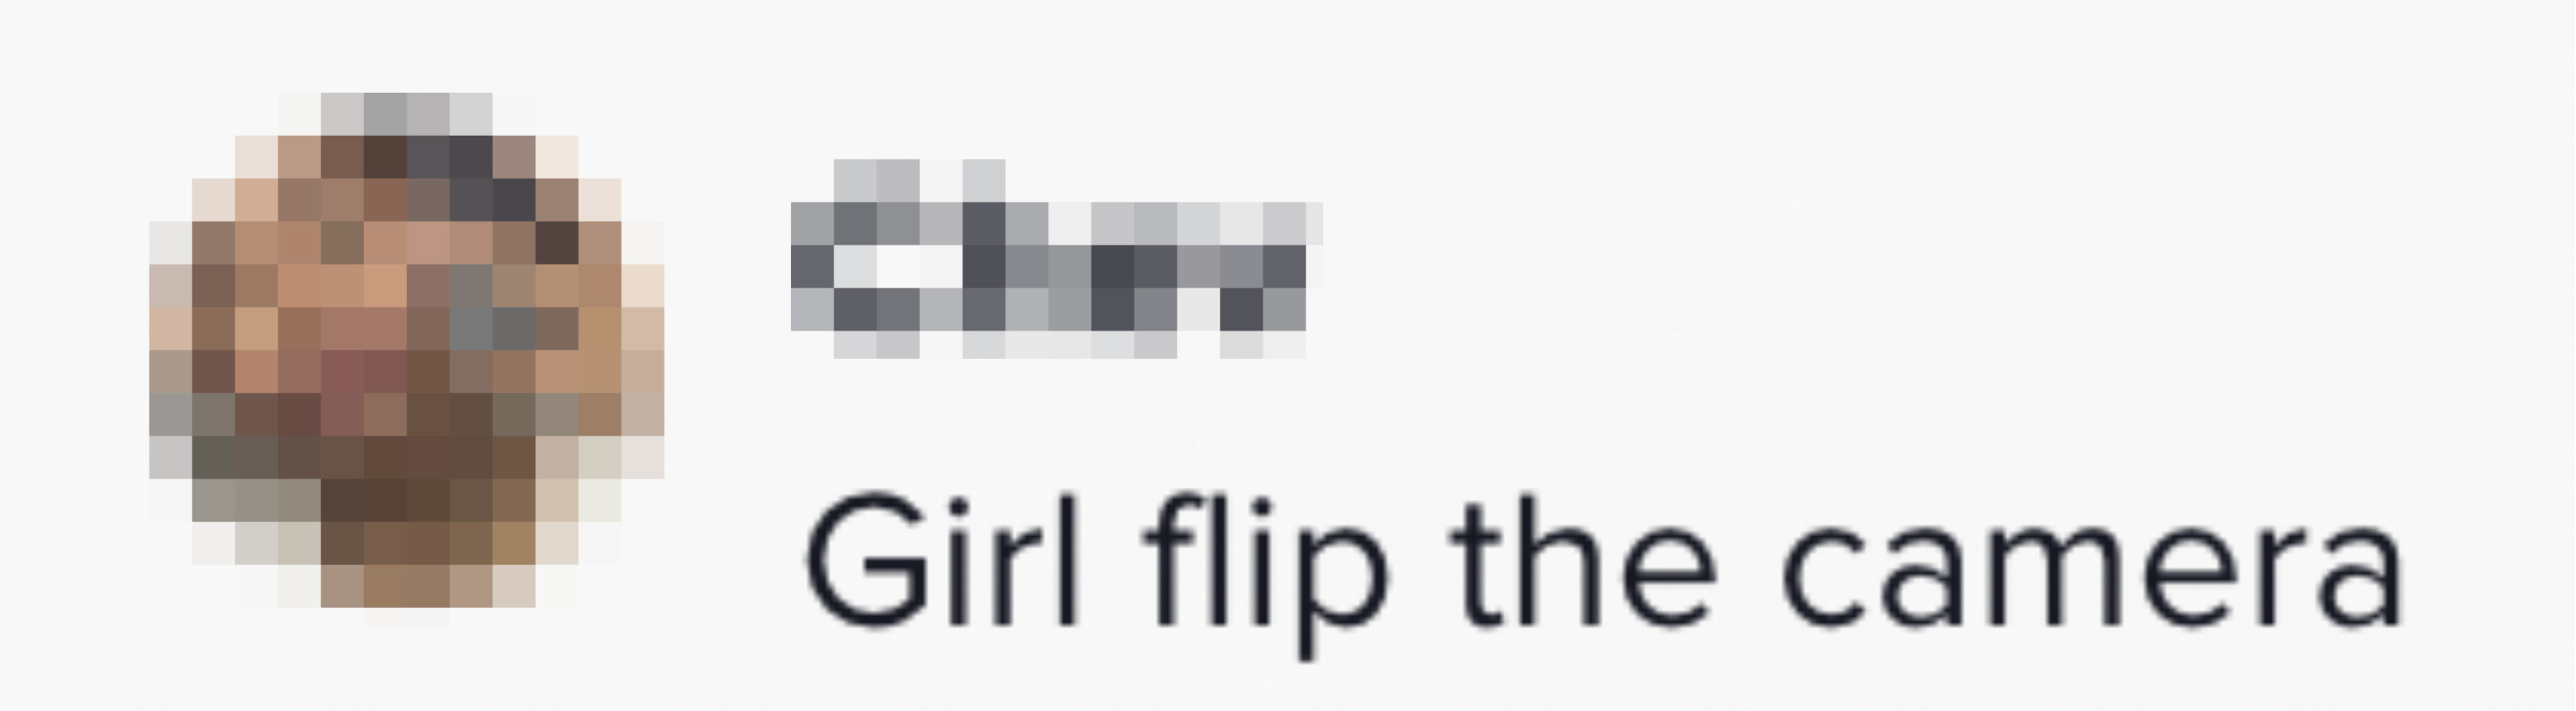 girl flip the camera